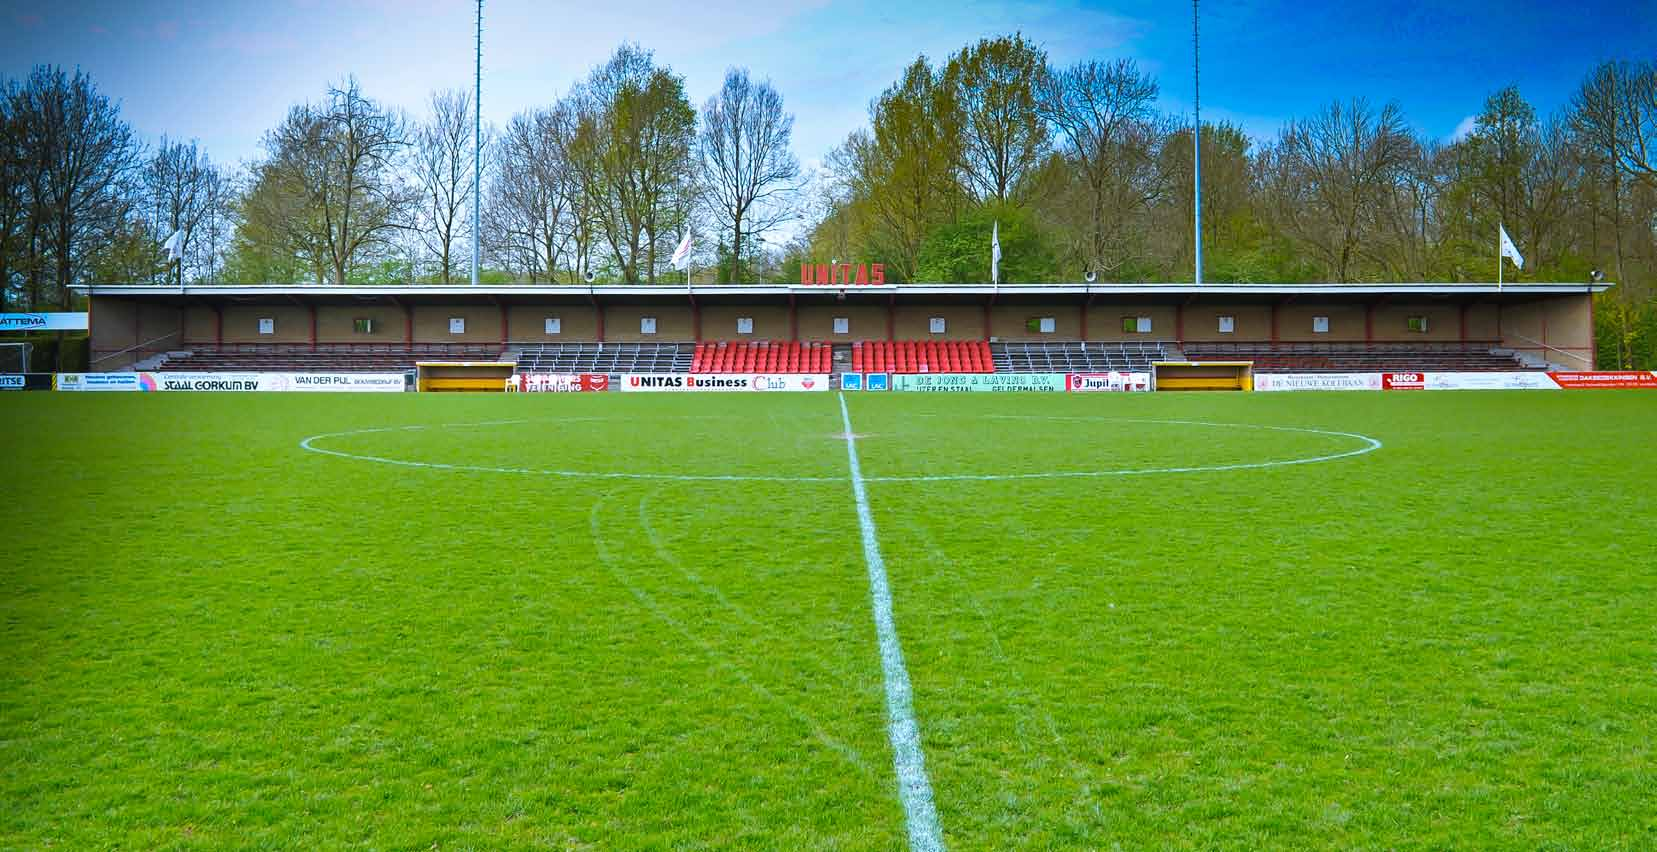 De vereniging gvv Unitas. 117 jaar. Unitas, de oudste voetbalclub van Gorinchem, wil op sportief gebied het hoogste niveau halen.